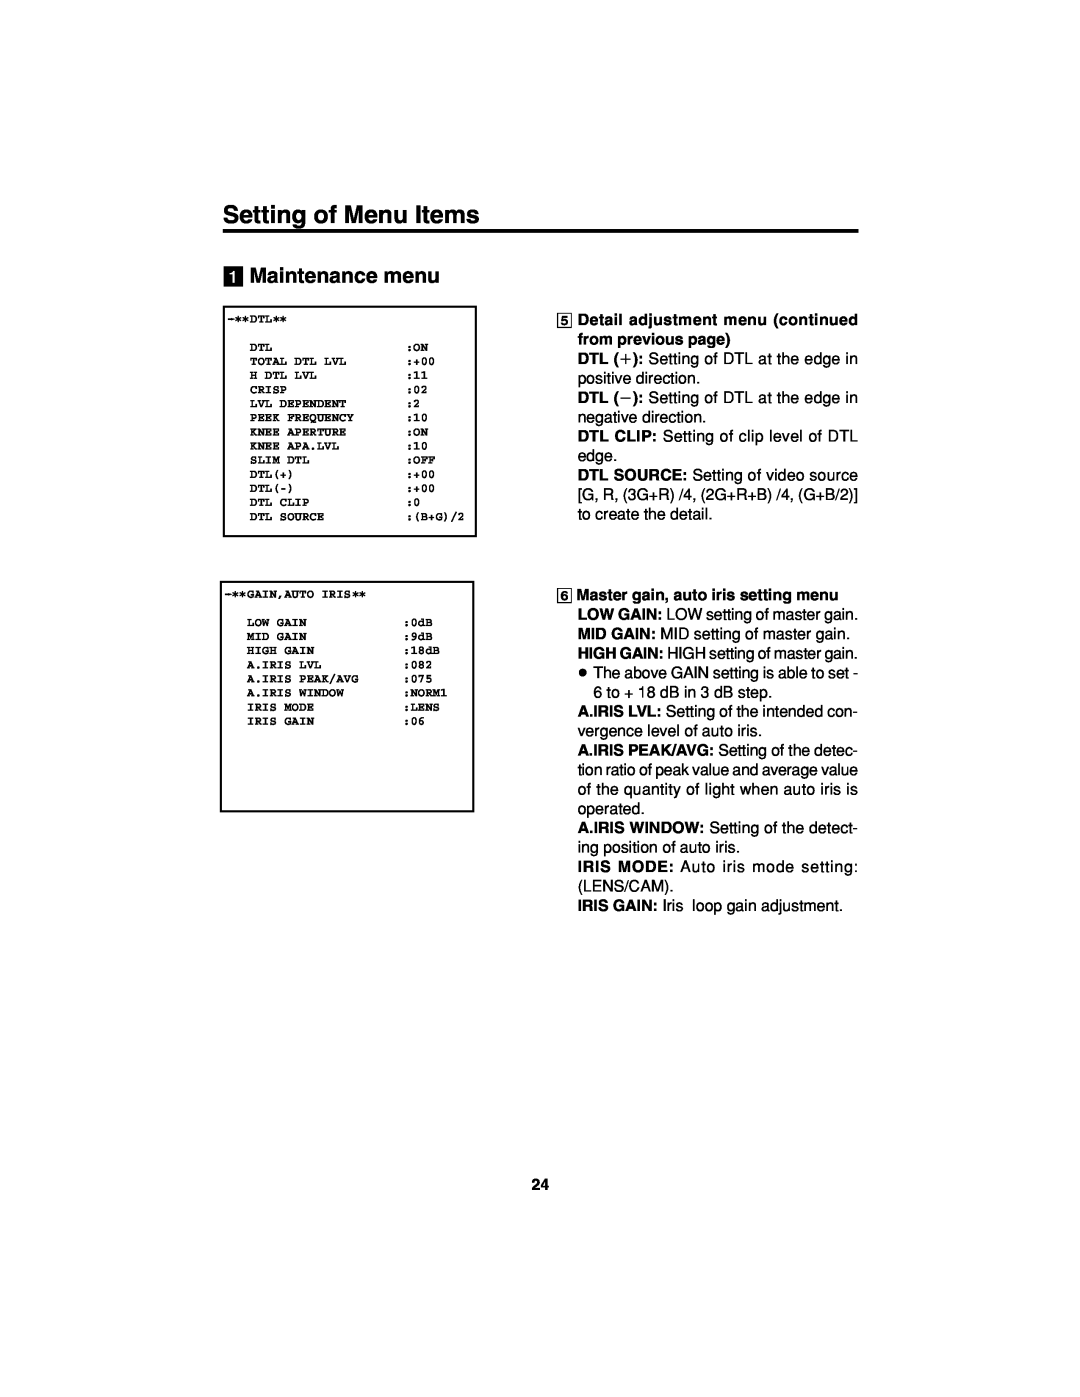 Panasonic AK-HC900 manual Detail adjustment menu continued from previous page, Master gain, auto iris setting menu 